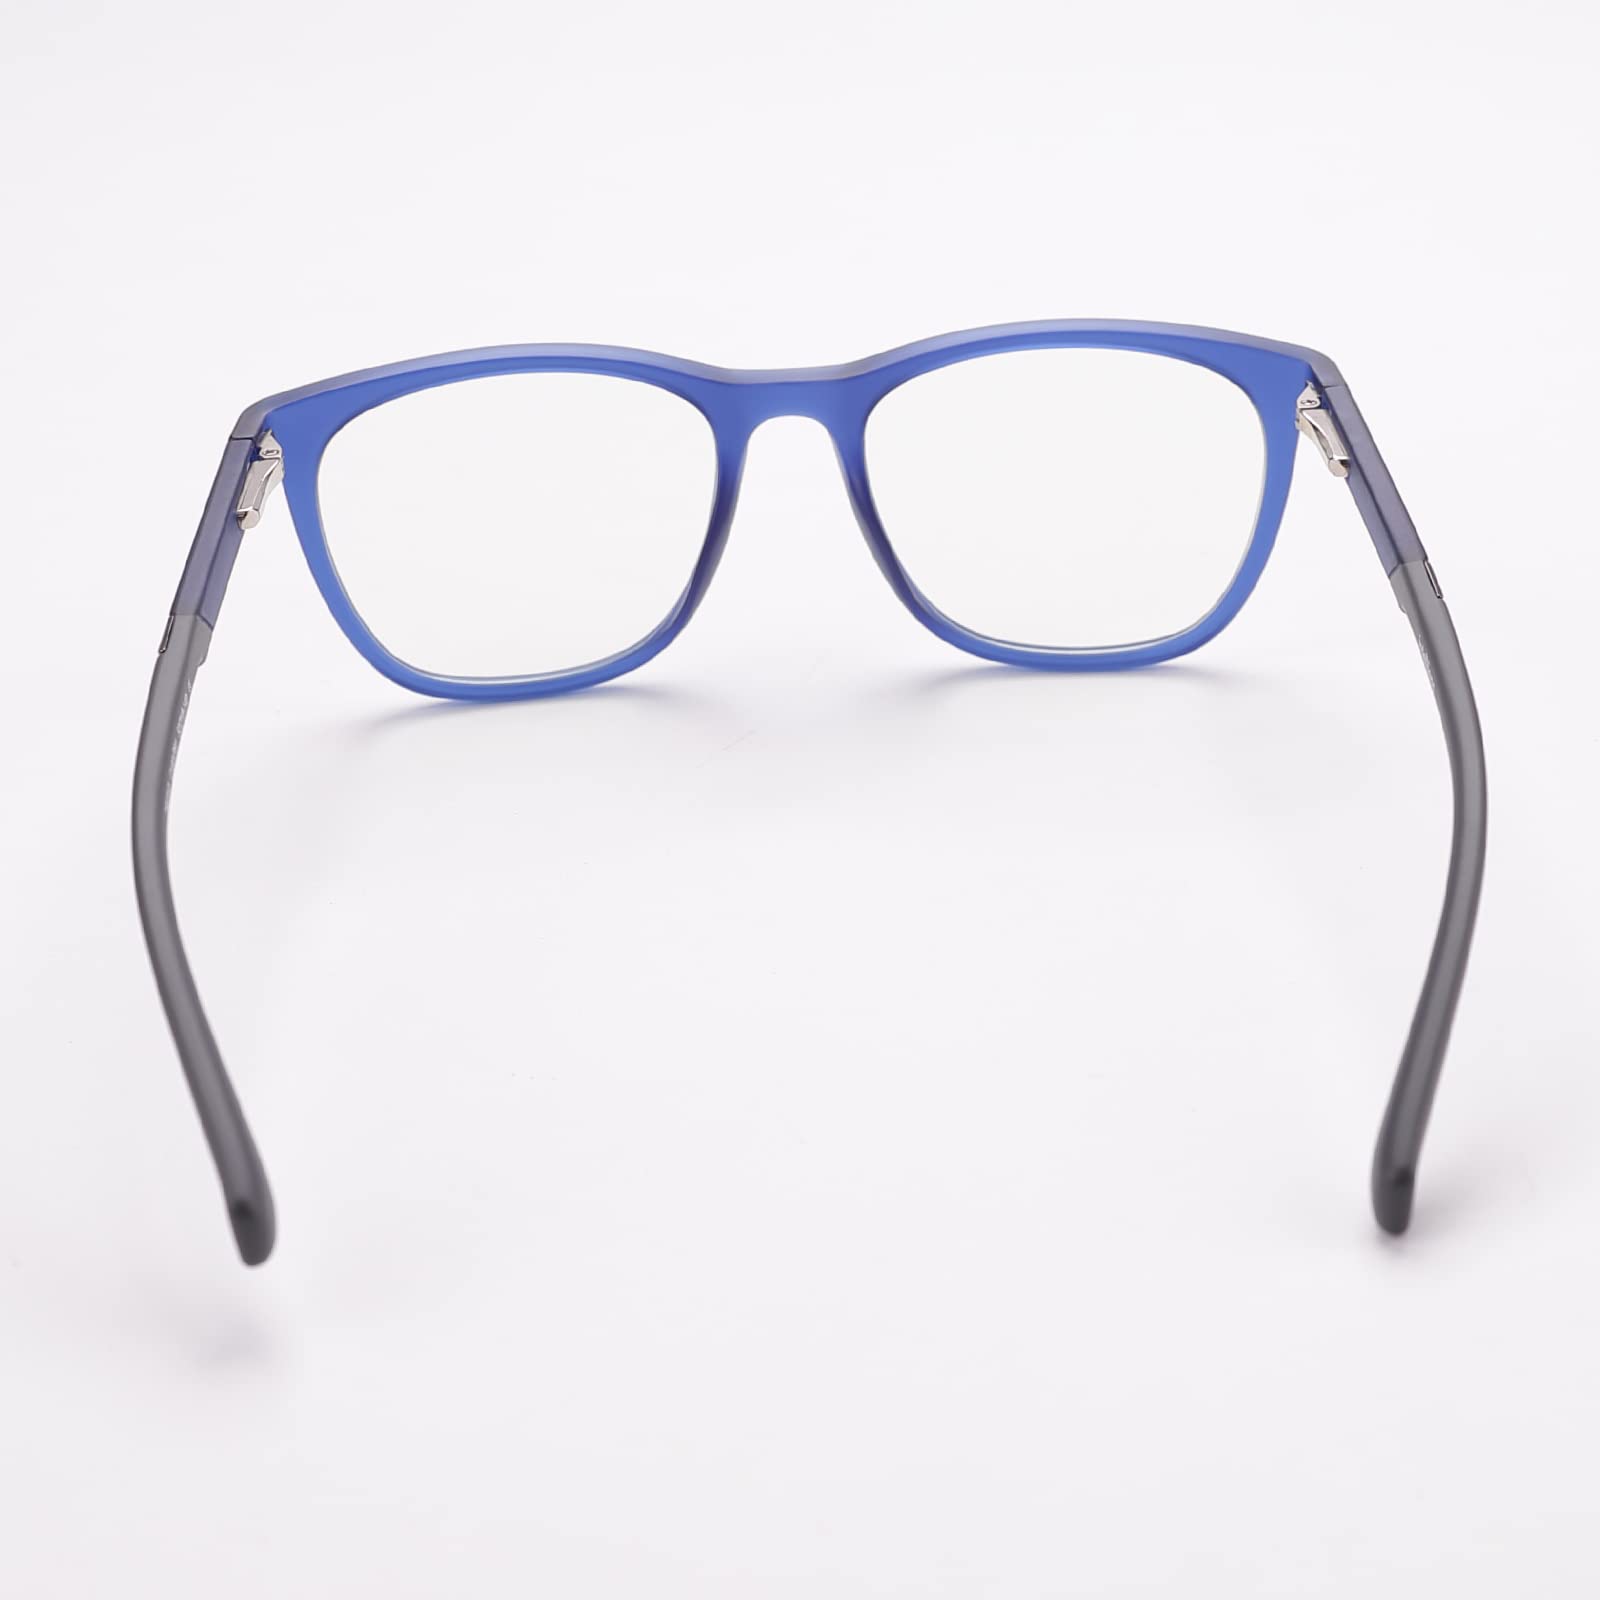 Intellilens Round Blue Cut Computer Glasses for Eye Protection | Zero Power, Anti Glare & Blue Light Filter Glasses | UV Protection Eye Glass for Men & Women (Blue) (52-18-140)